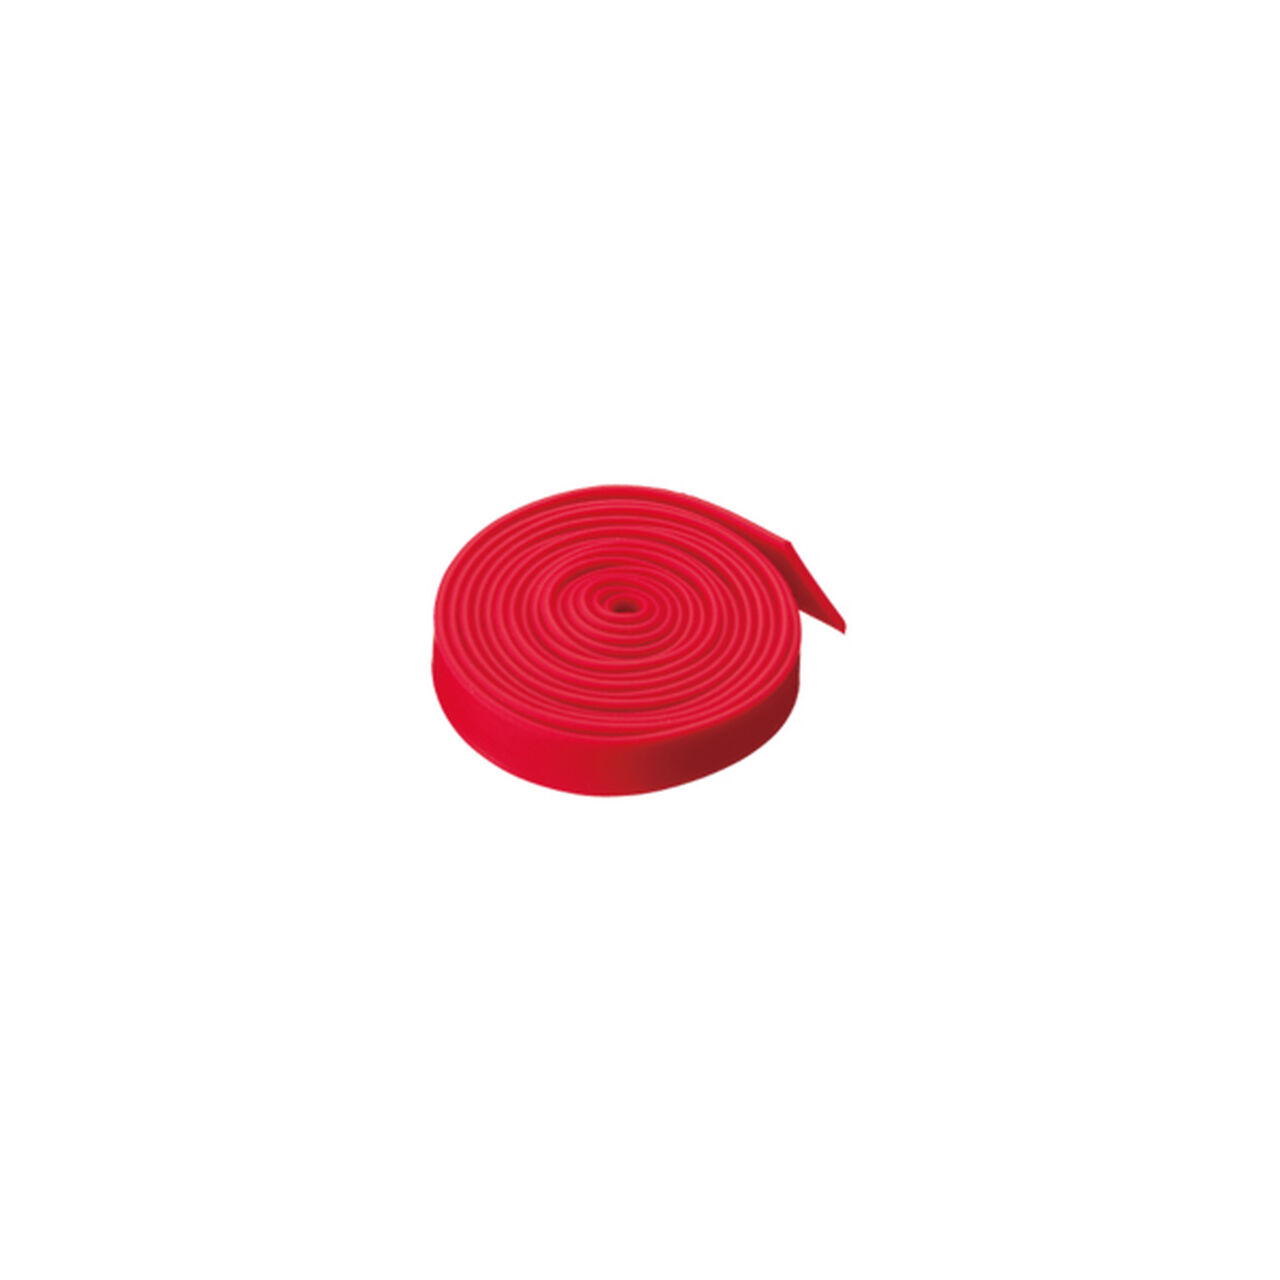 SWANS (速安视) SRB-20 R 红色 游泳镜备用带,Opt2, large image number 0